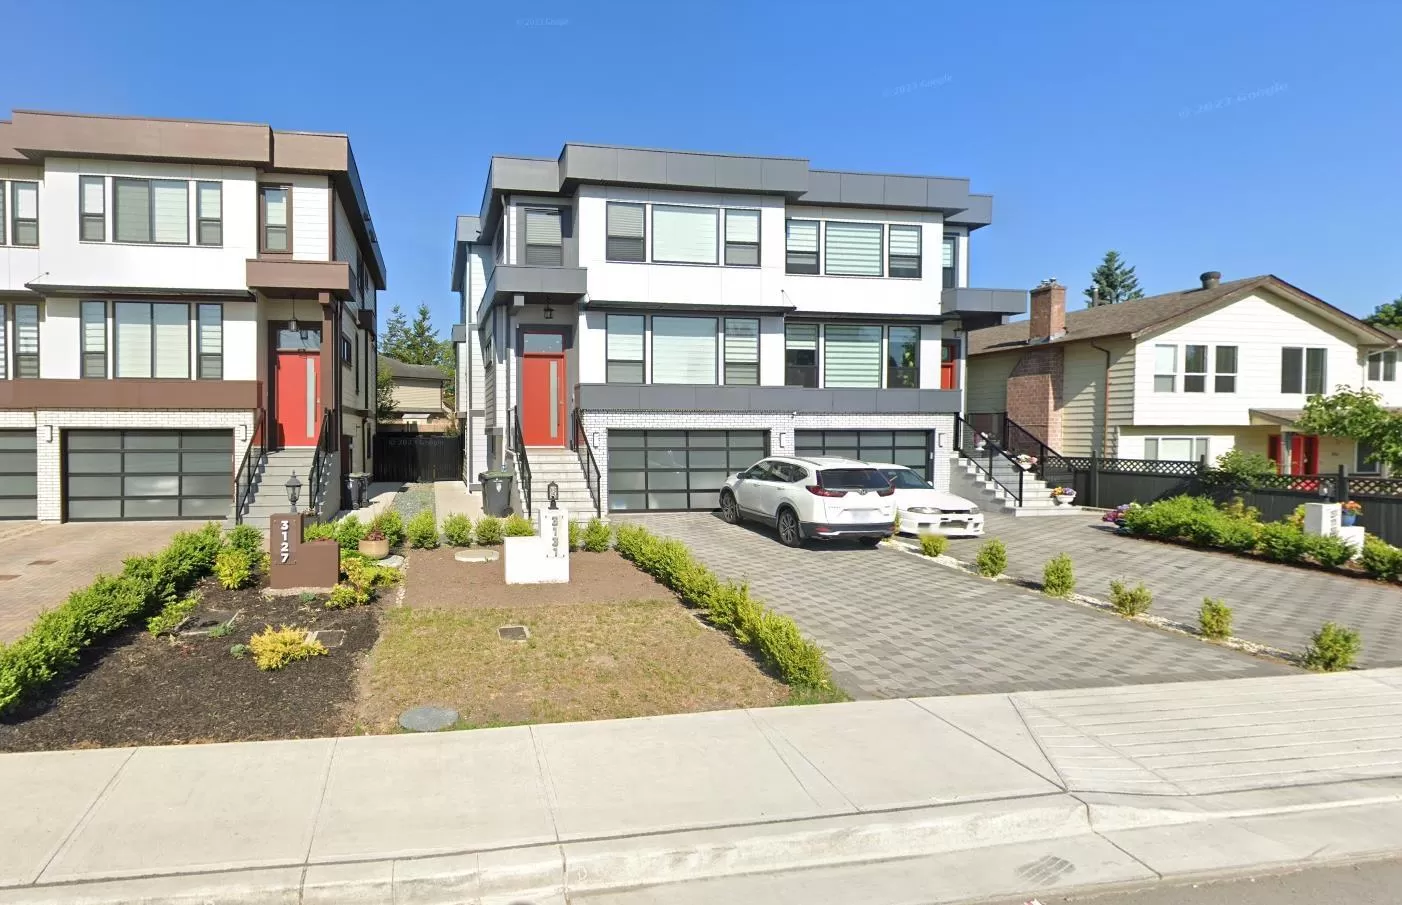 Duplex for rent: 3131 268 Street, Langley, British Columbia V4W 3E4